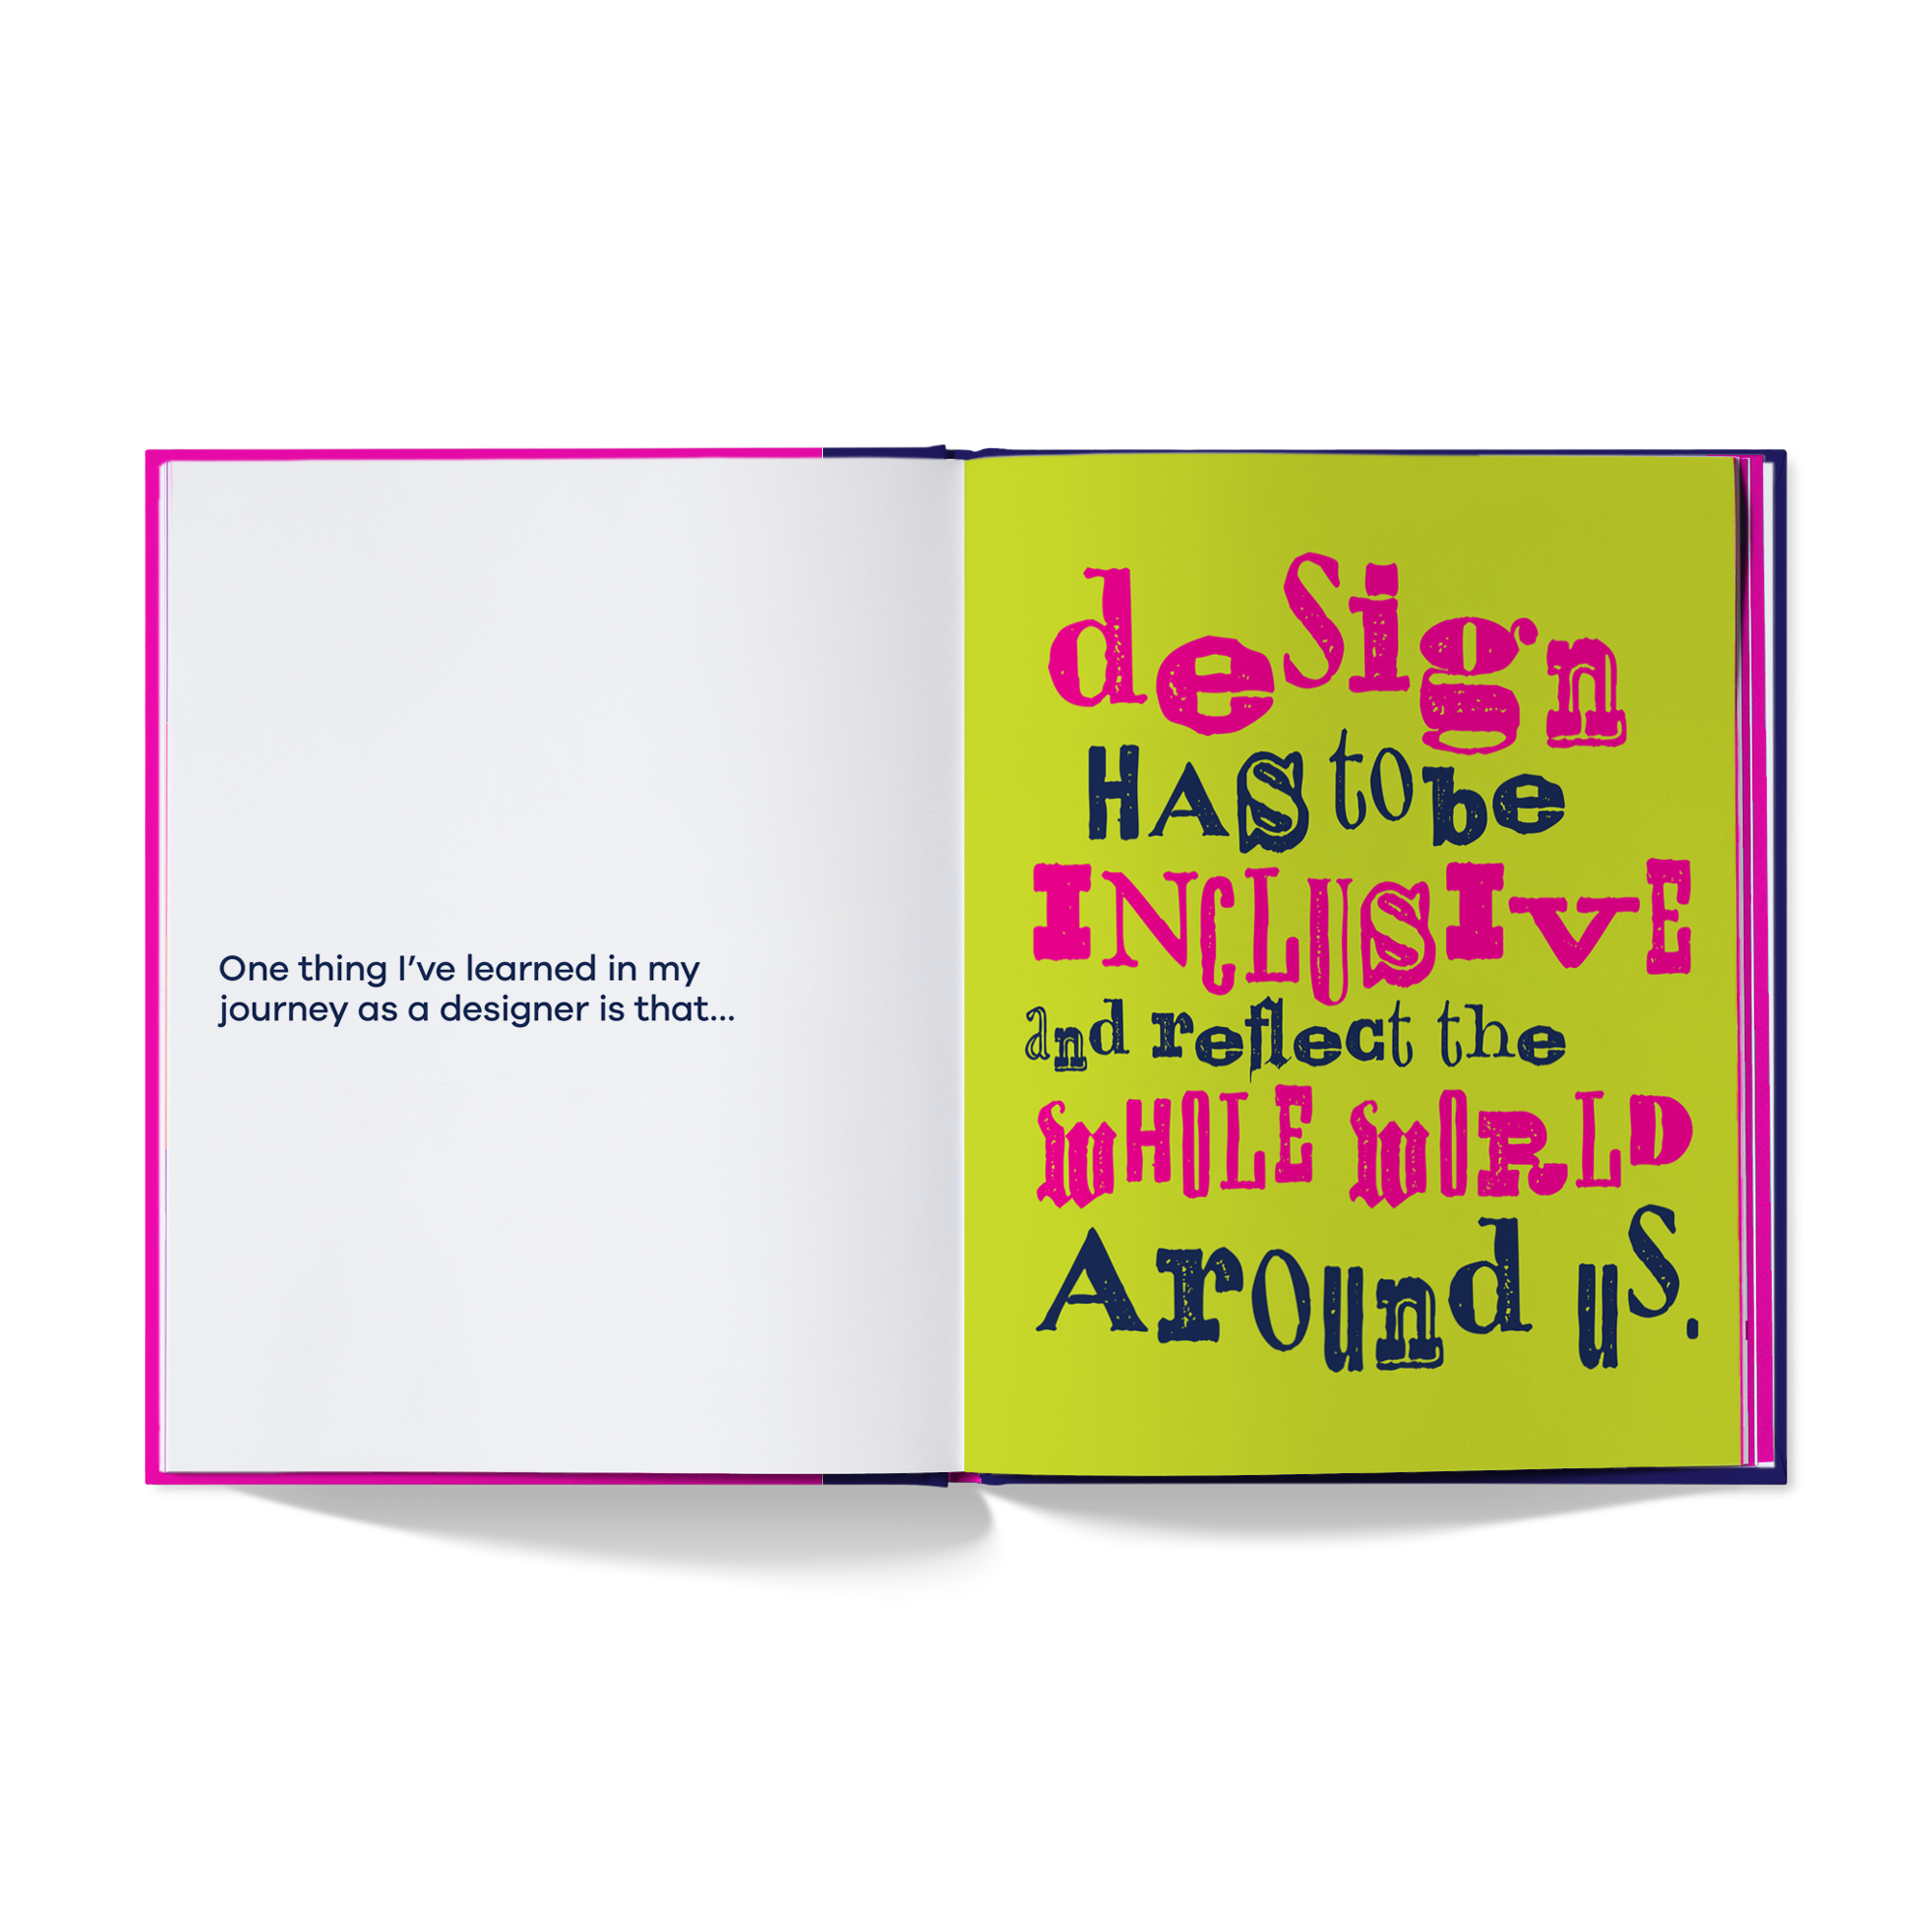 A Kids Book About Design